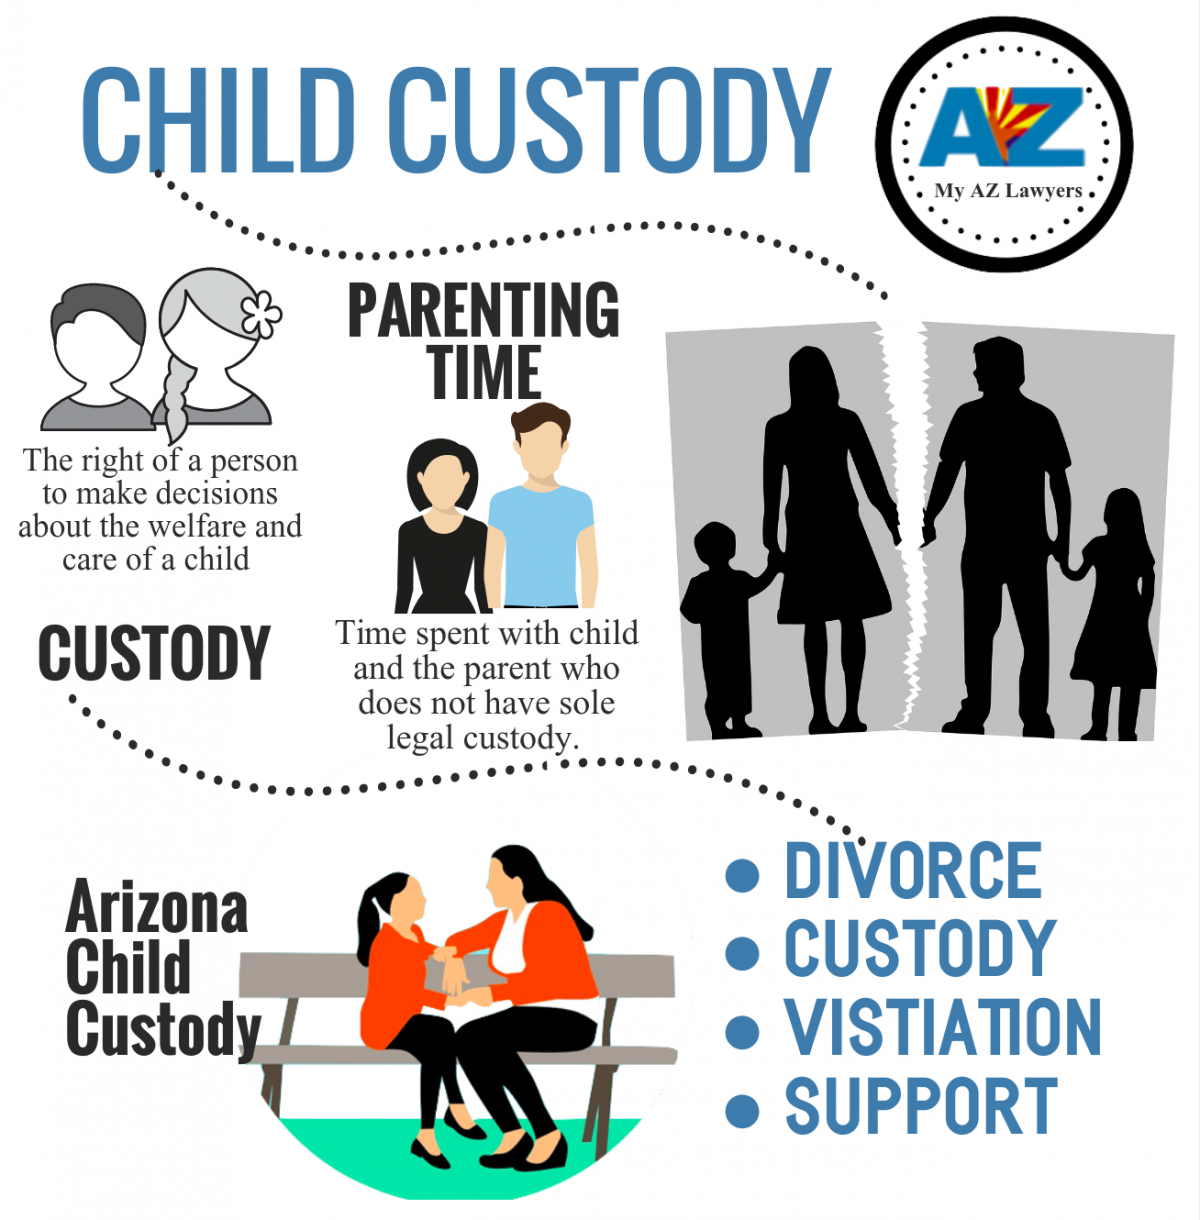 Child Custody Visitation Lawyers in Arizona Low Cost Family Custody